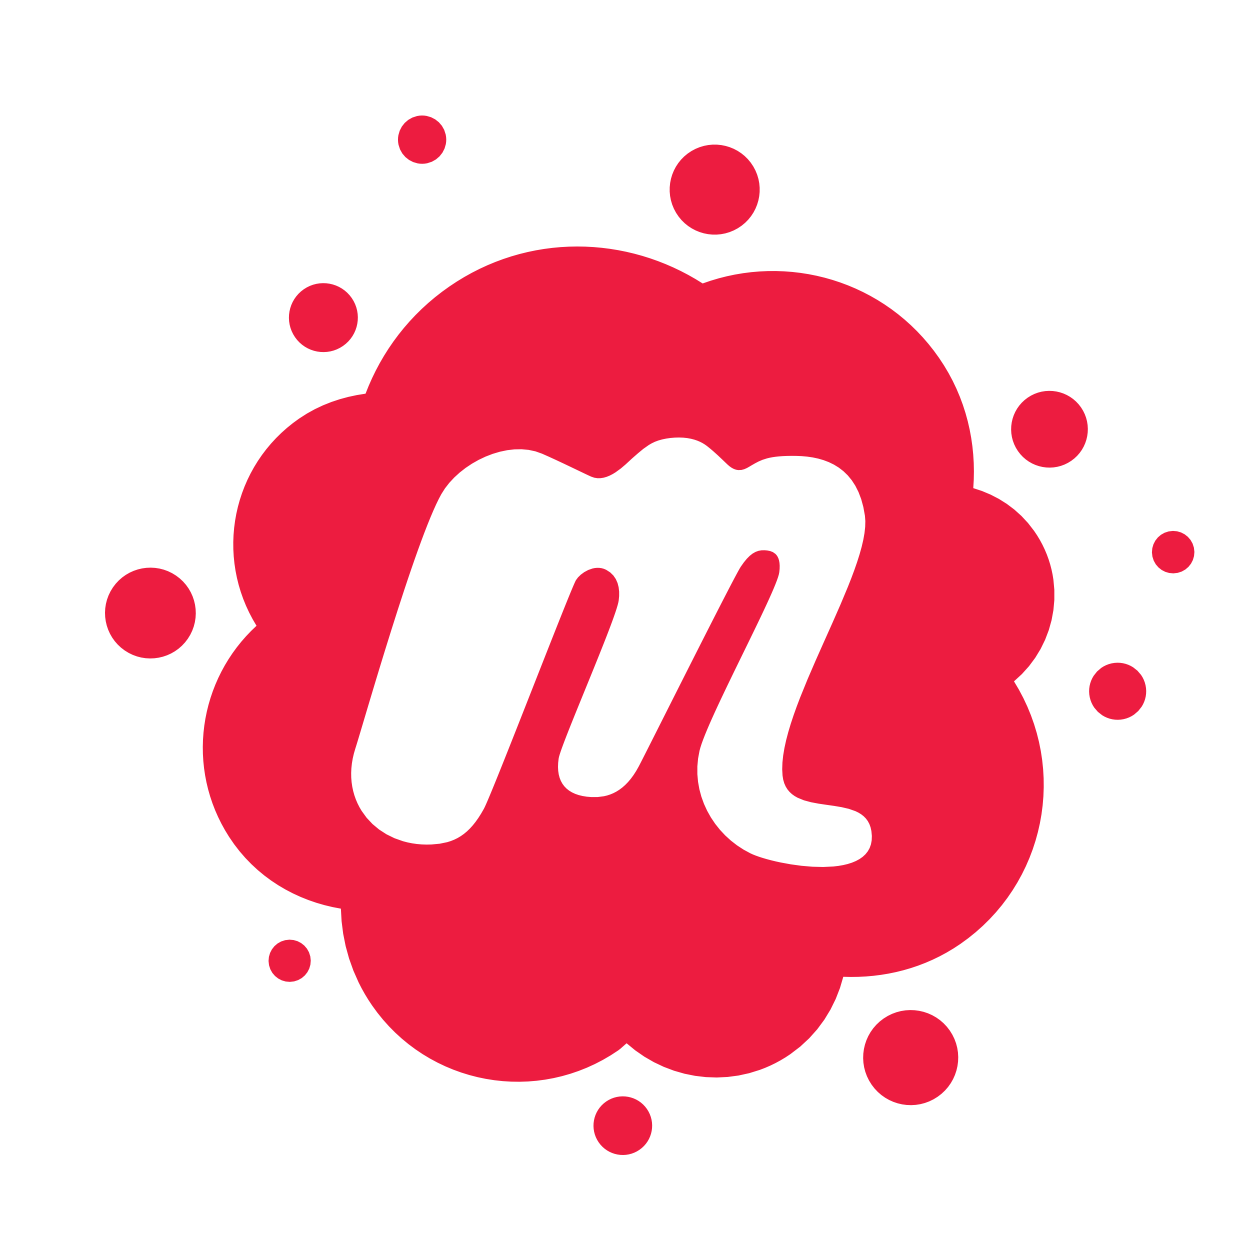 Meetup Logo - We are what we do | Meetup